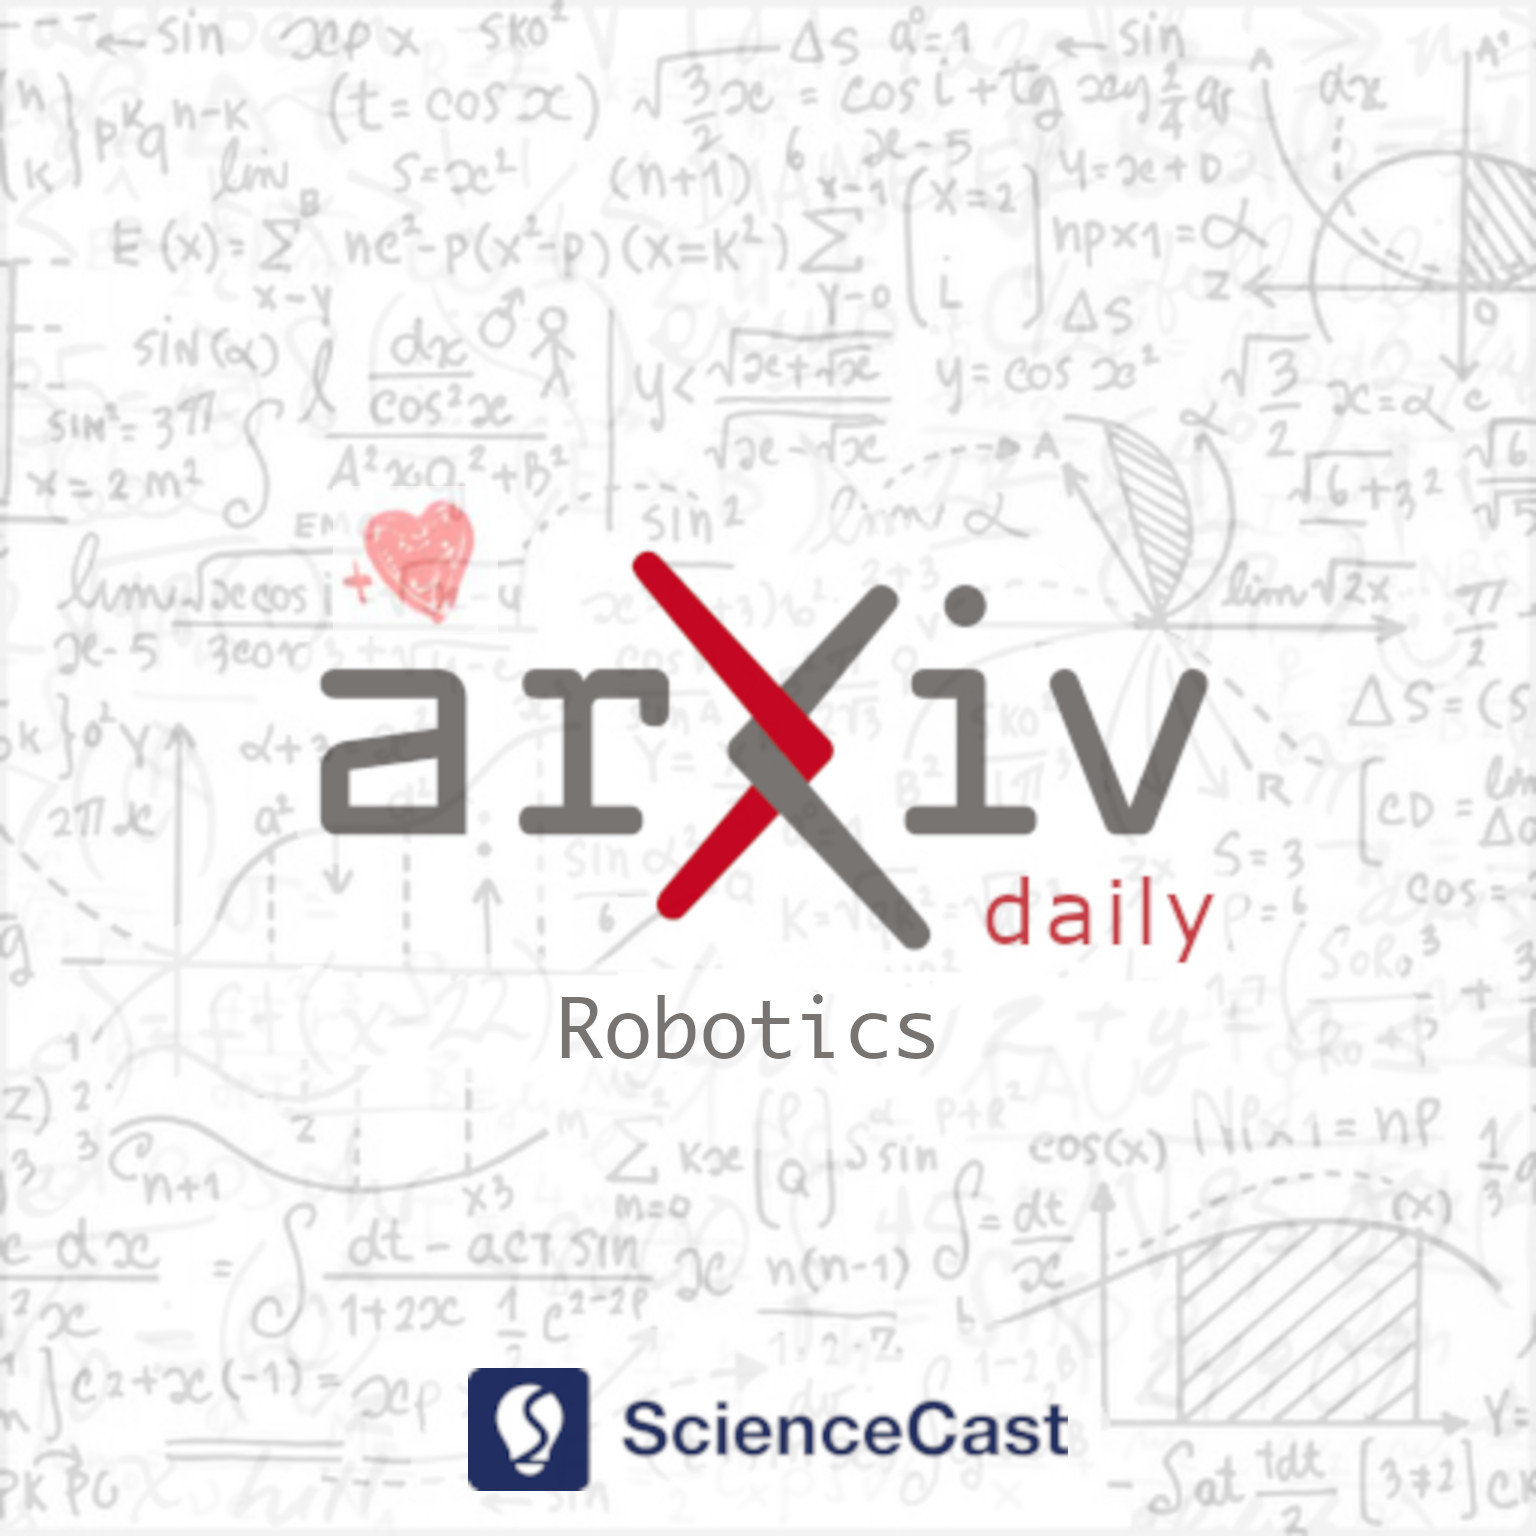 arXiv daily: Robotics